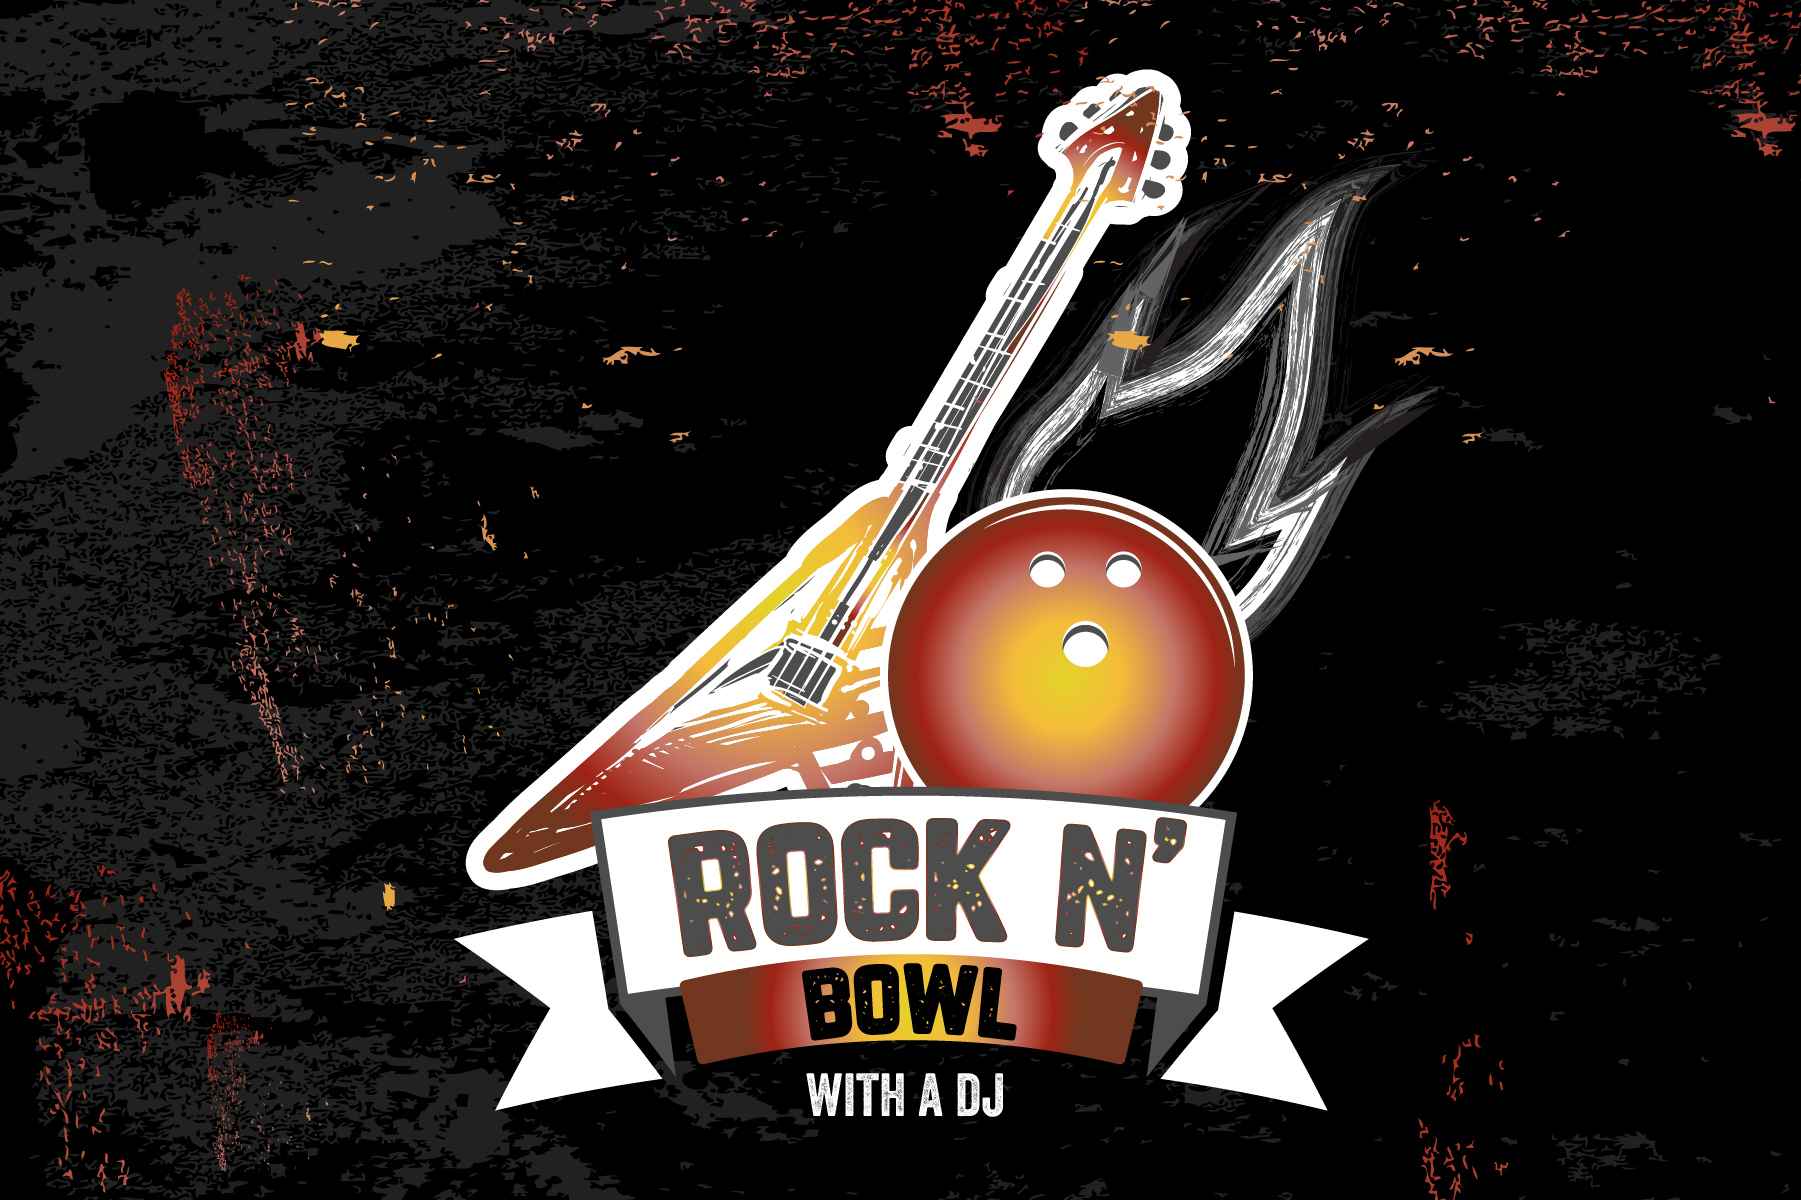 Rock N Bowl with a DJ